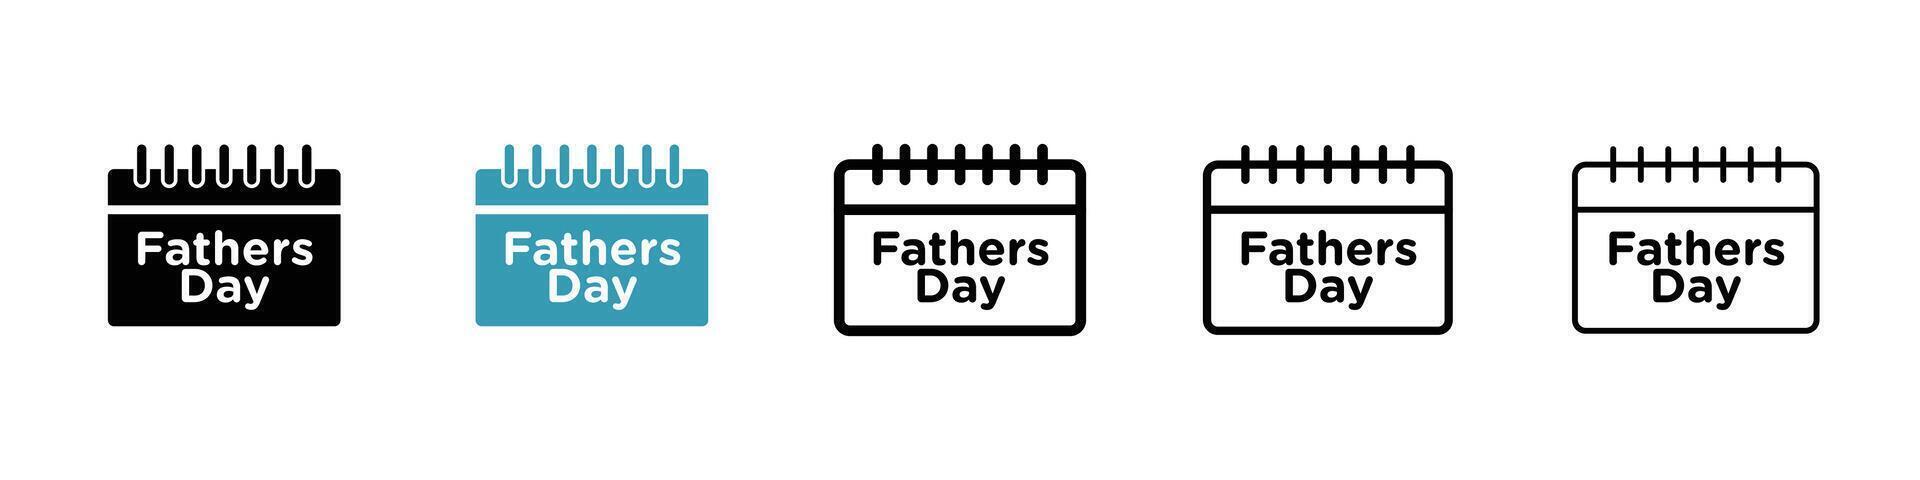 Fathers day calendar icon vector